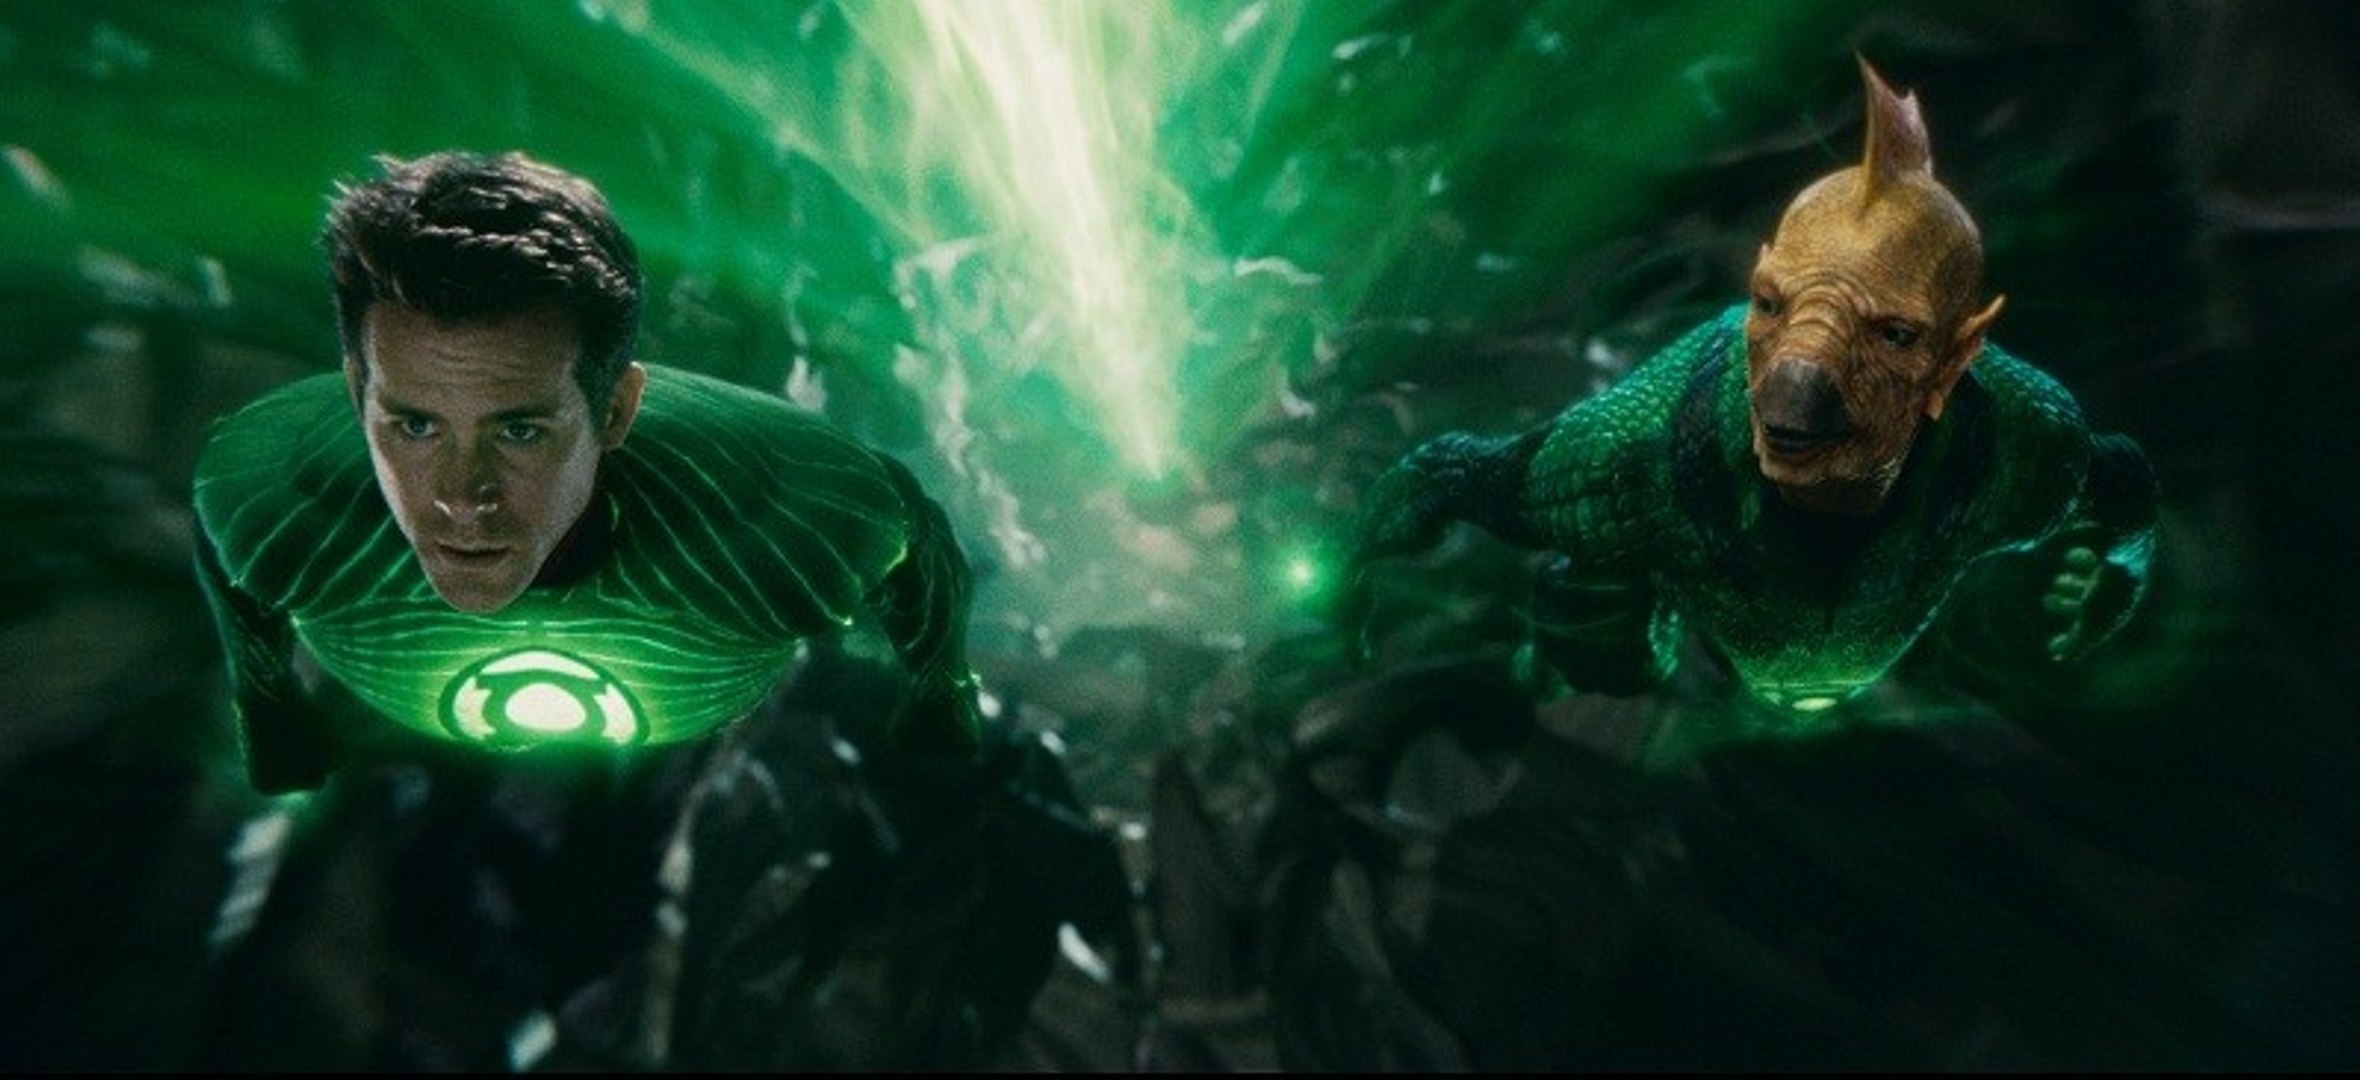 Оно зеленое. Зеленый фонарь (2011) Green Lantern. Блейк Лайвли зеленый фонарь.